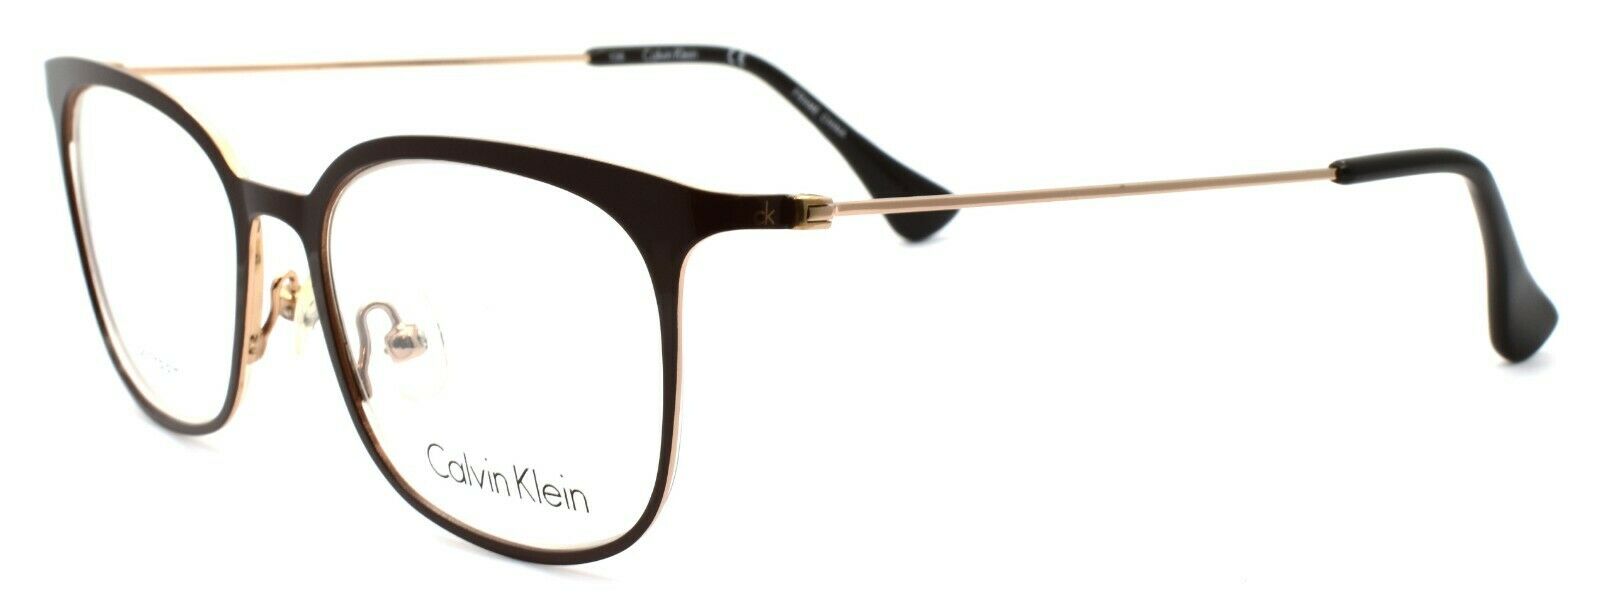 1-Calvin Klein CK5432 210 Women's Eyeglasses Frames PETITE 47-17-135 Chocolate-750779100936-IKSpecs